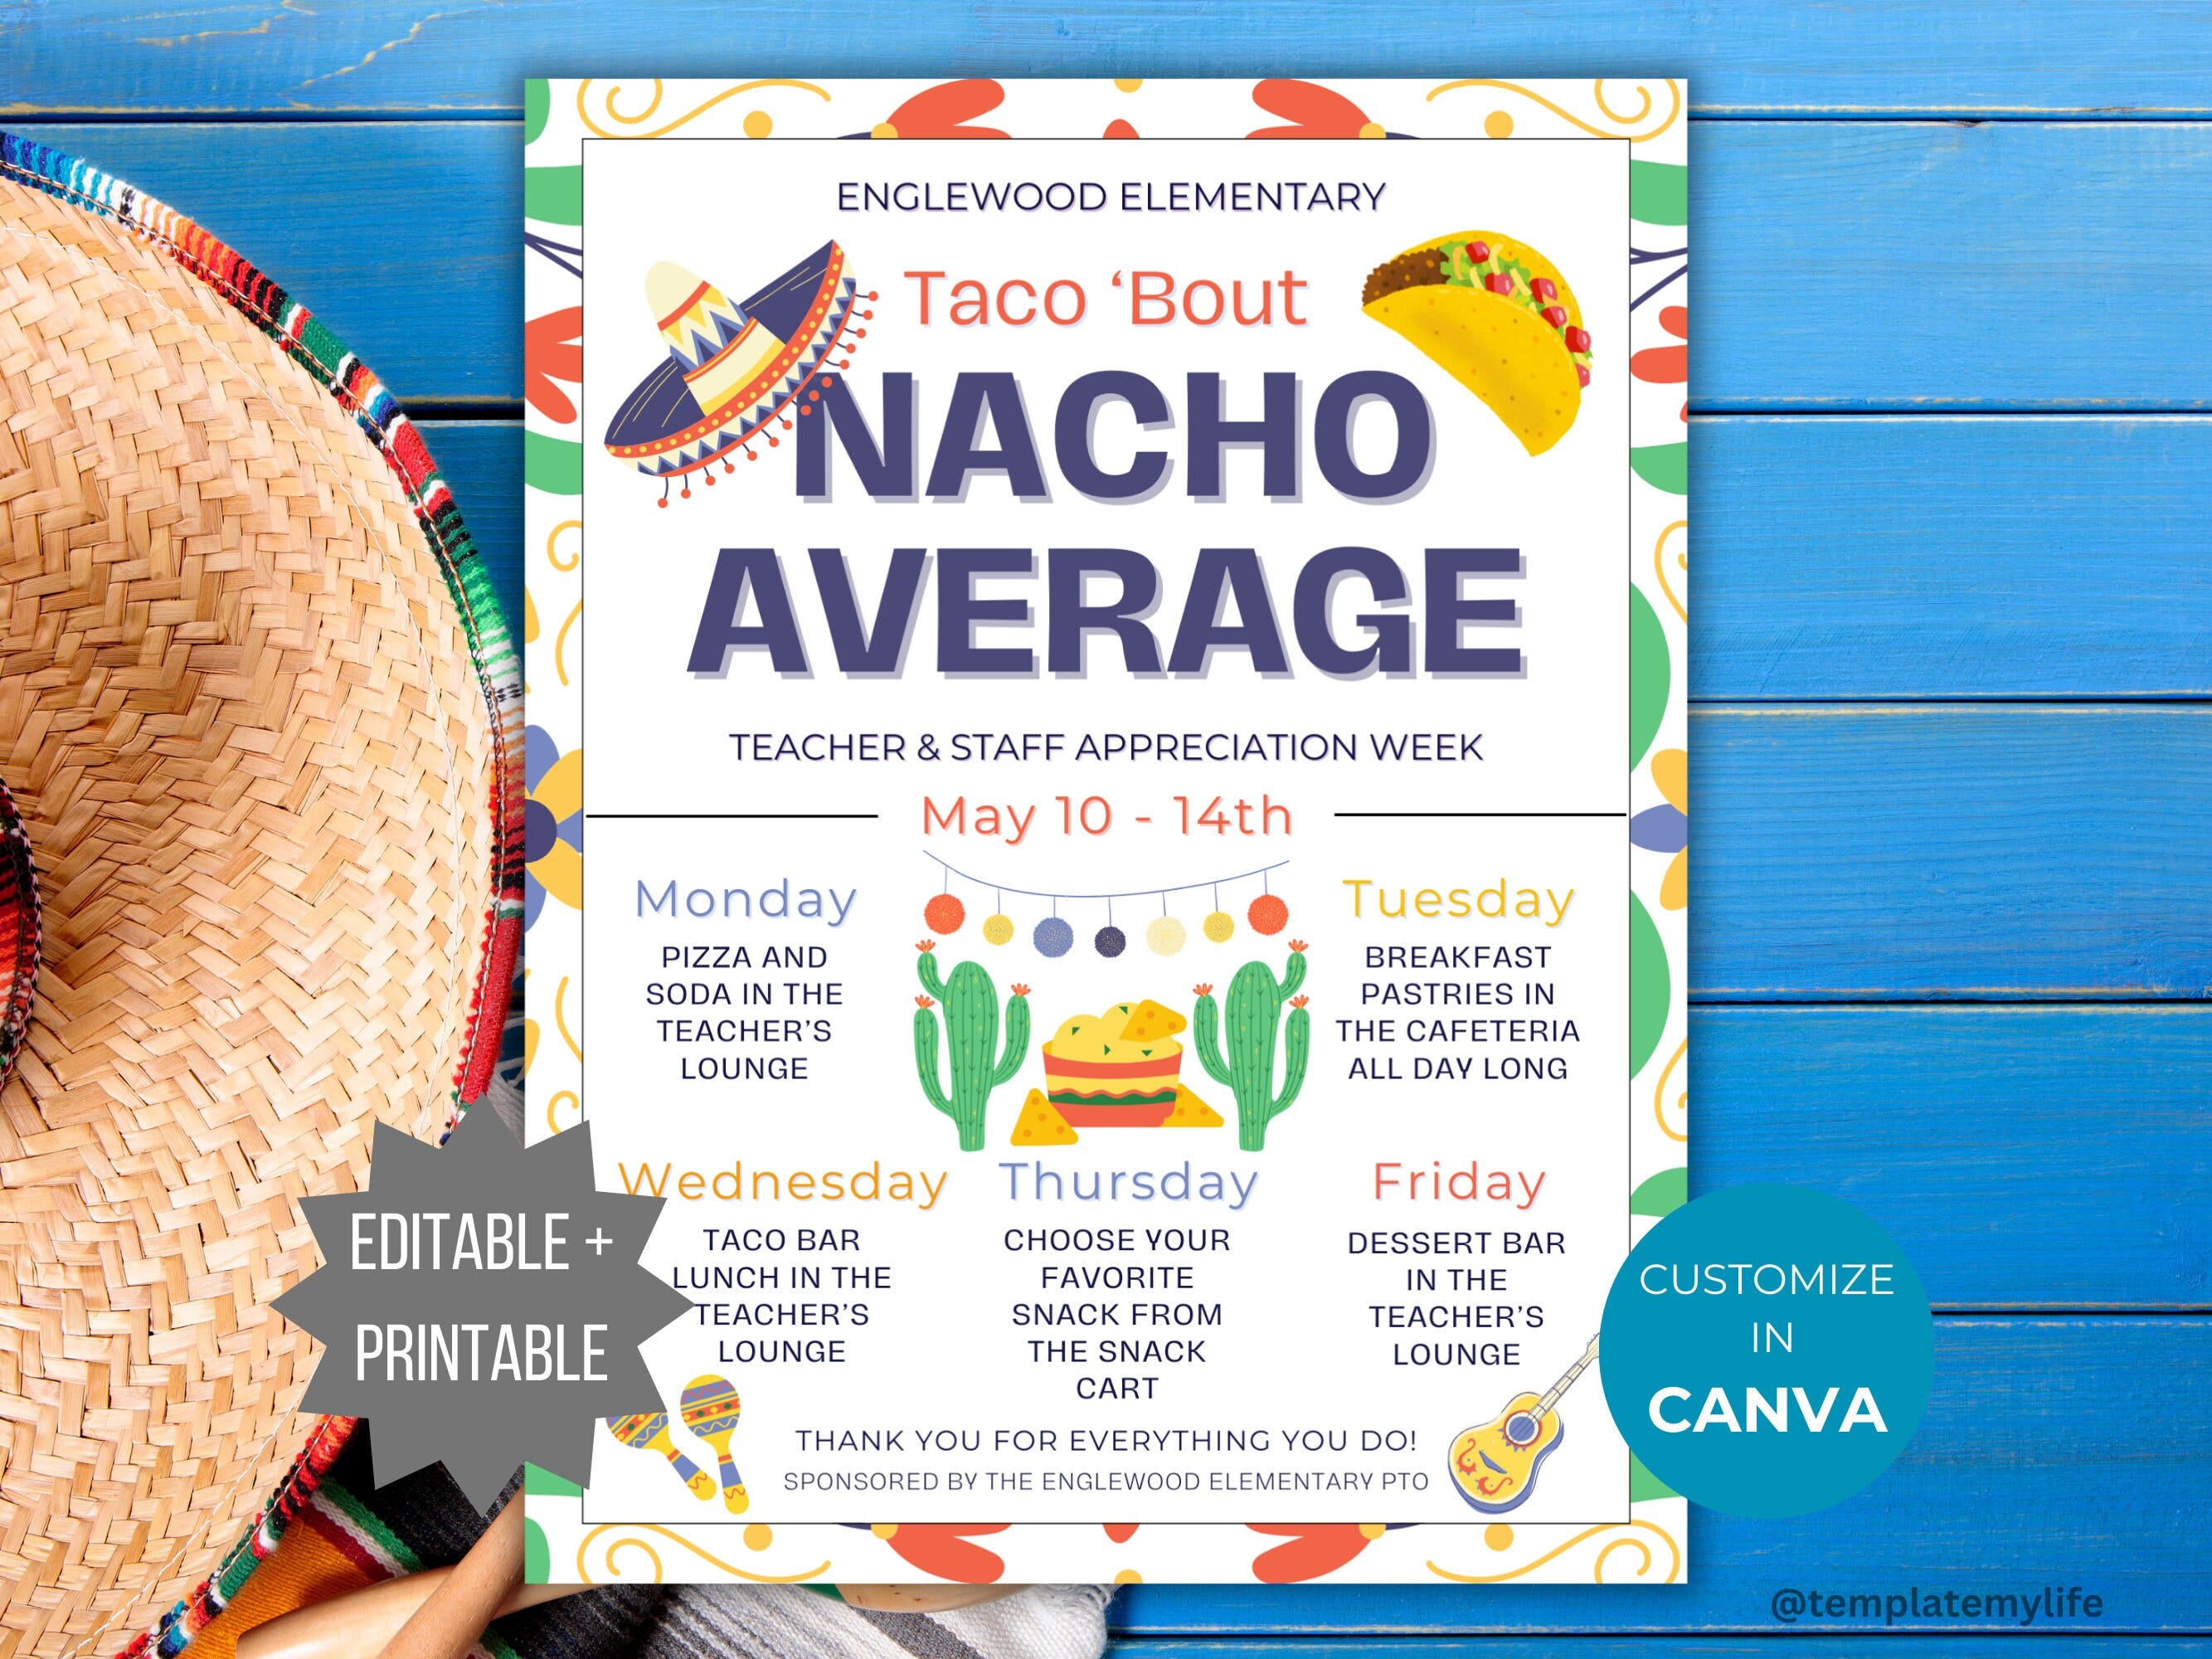 Nacho Average Teacher and Staff Appreciation Week Flyer Template Taco Bout School Staff Appreciation schedule teacher appreciation itinerary